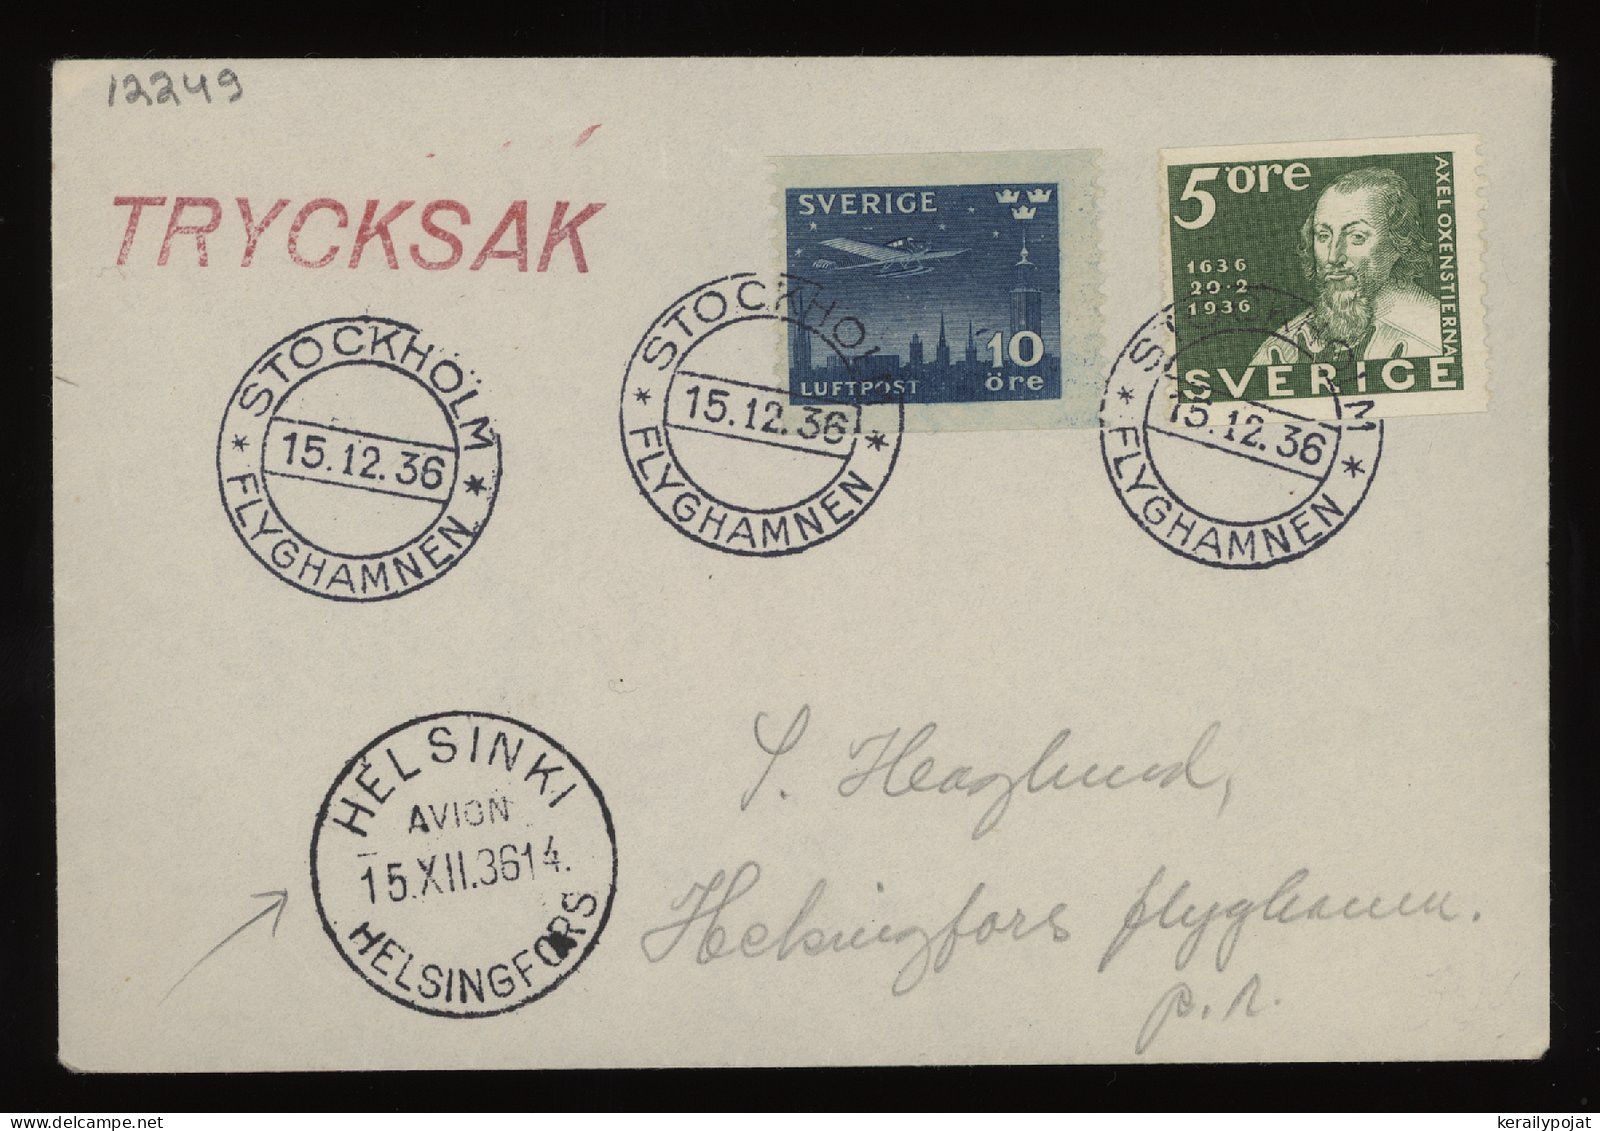 Sweden 1936 Stockholm Air Mail Cover To Finland__(12249) - Brieven En Documenten